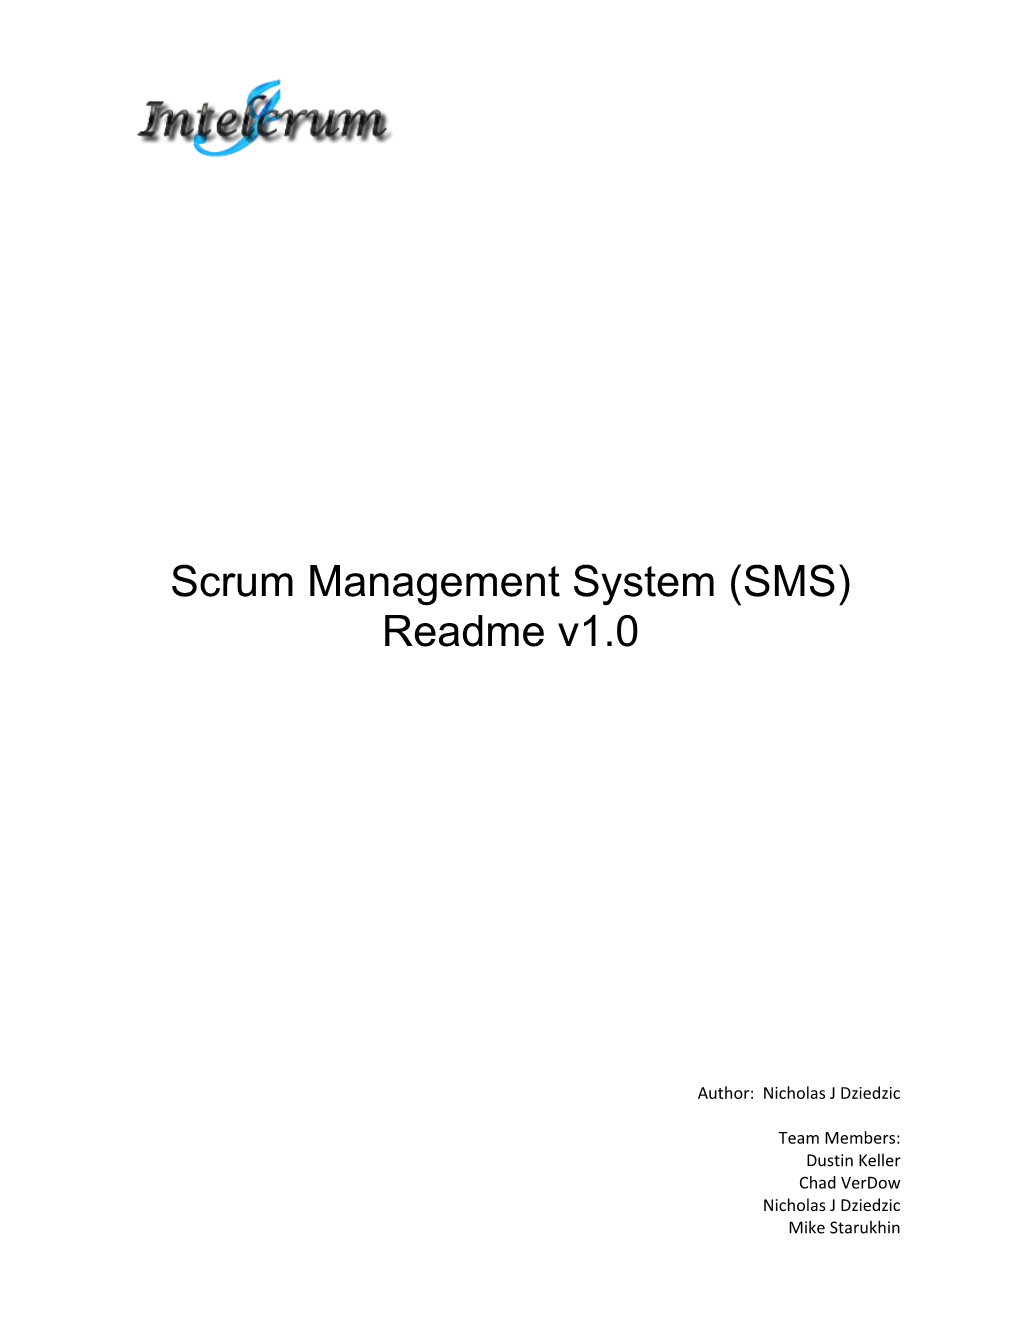 Scrum Management System - Readme 7